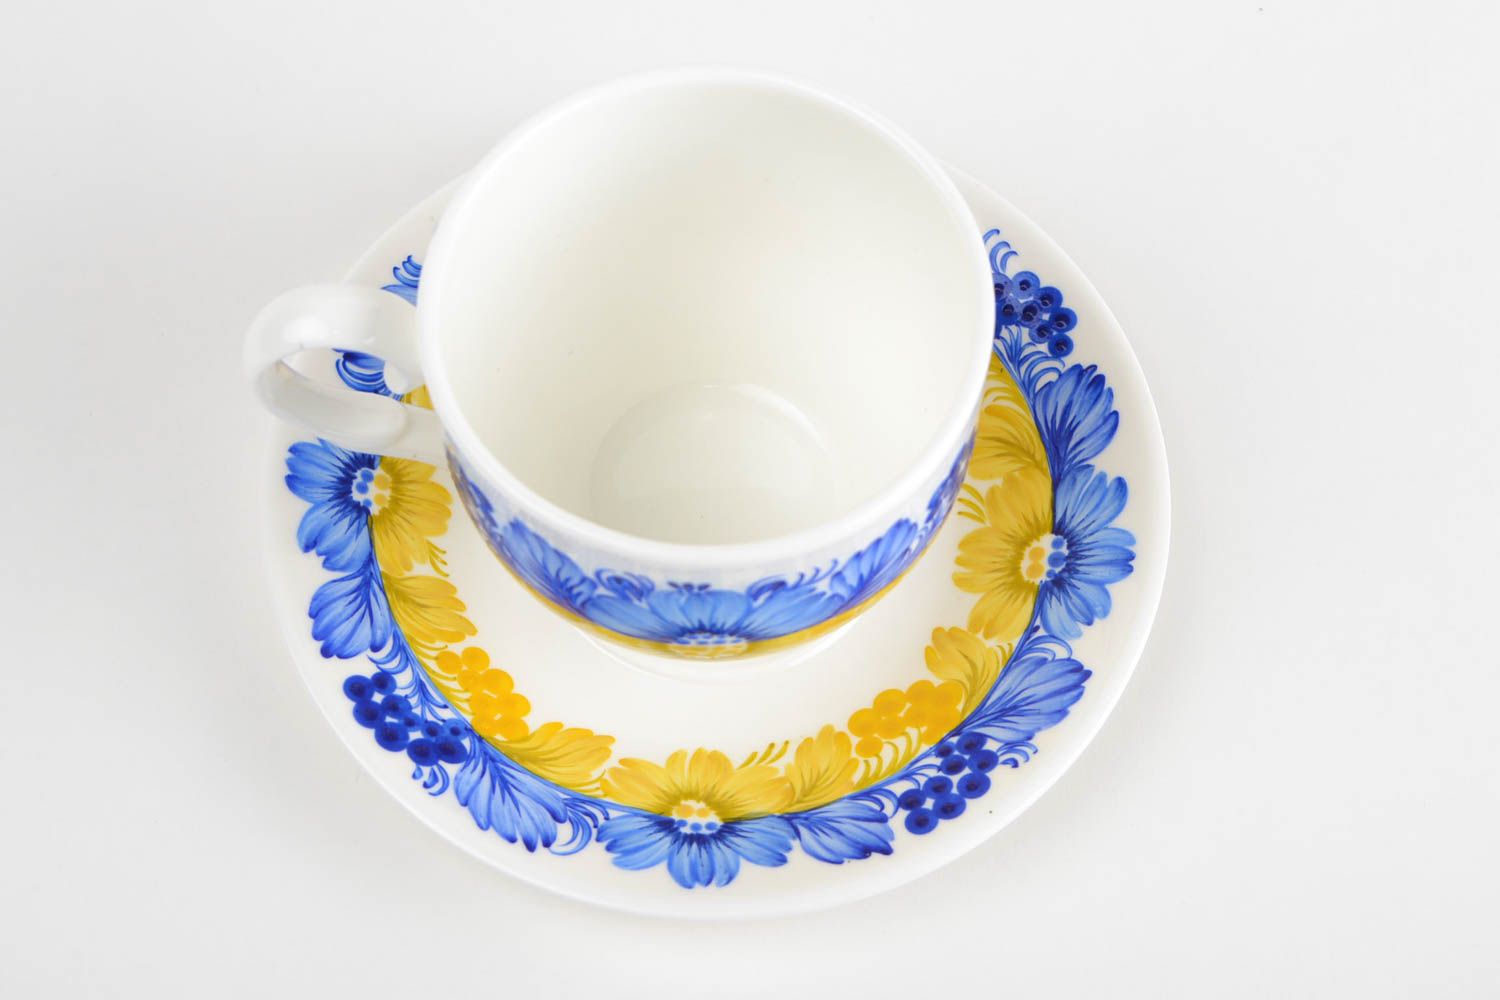 Elegant porcelain teacup in Ukrainian flag colors - yellow and blue photo 5